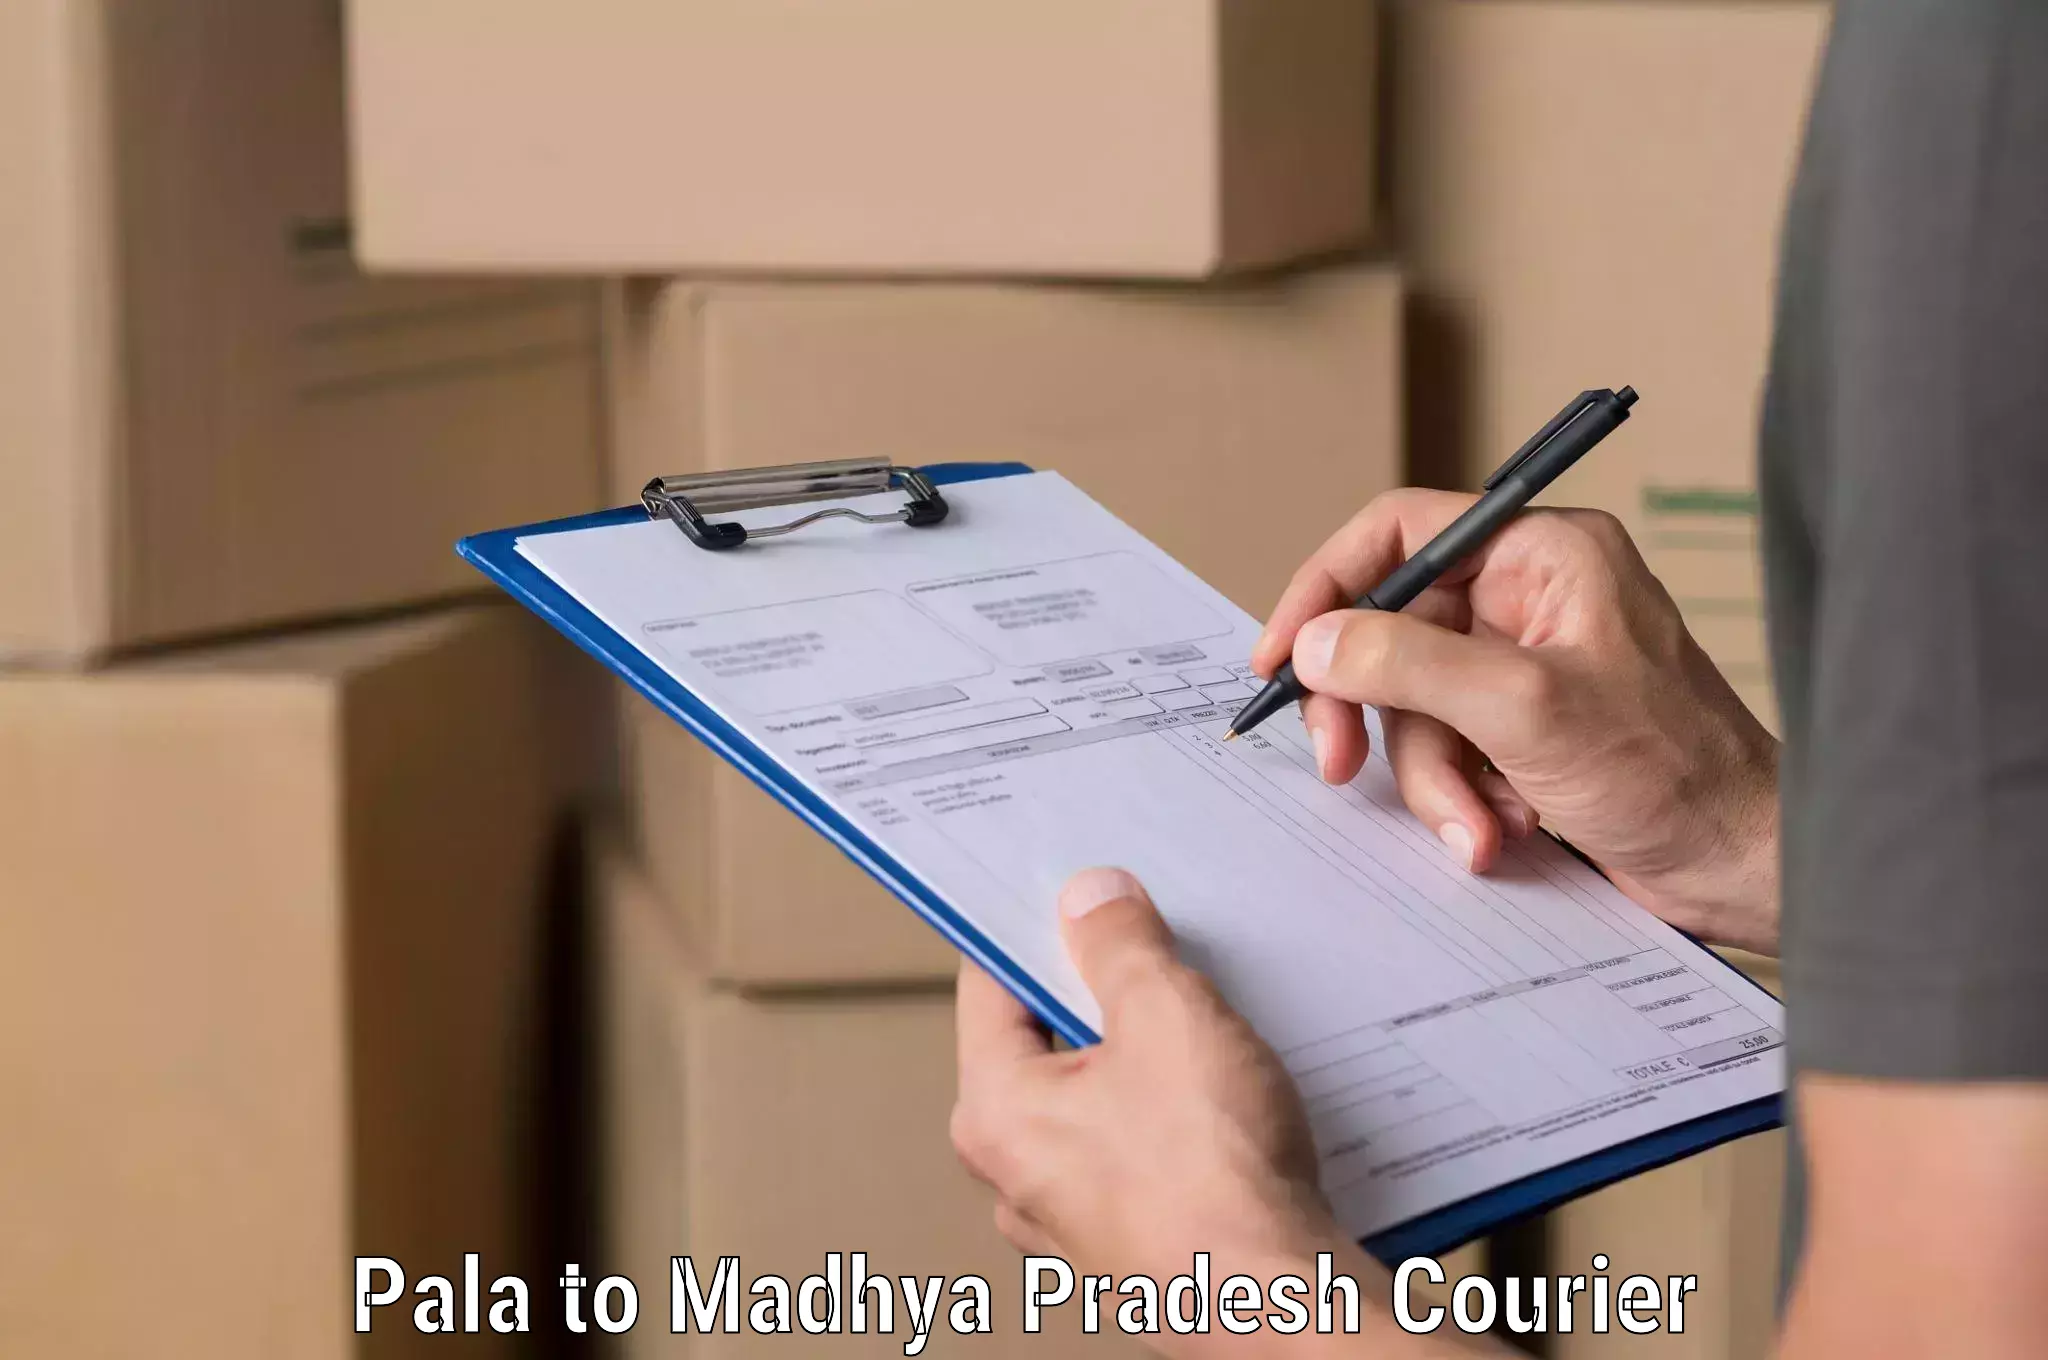 Customer-focused courier Pala to Madhya Pradesh